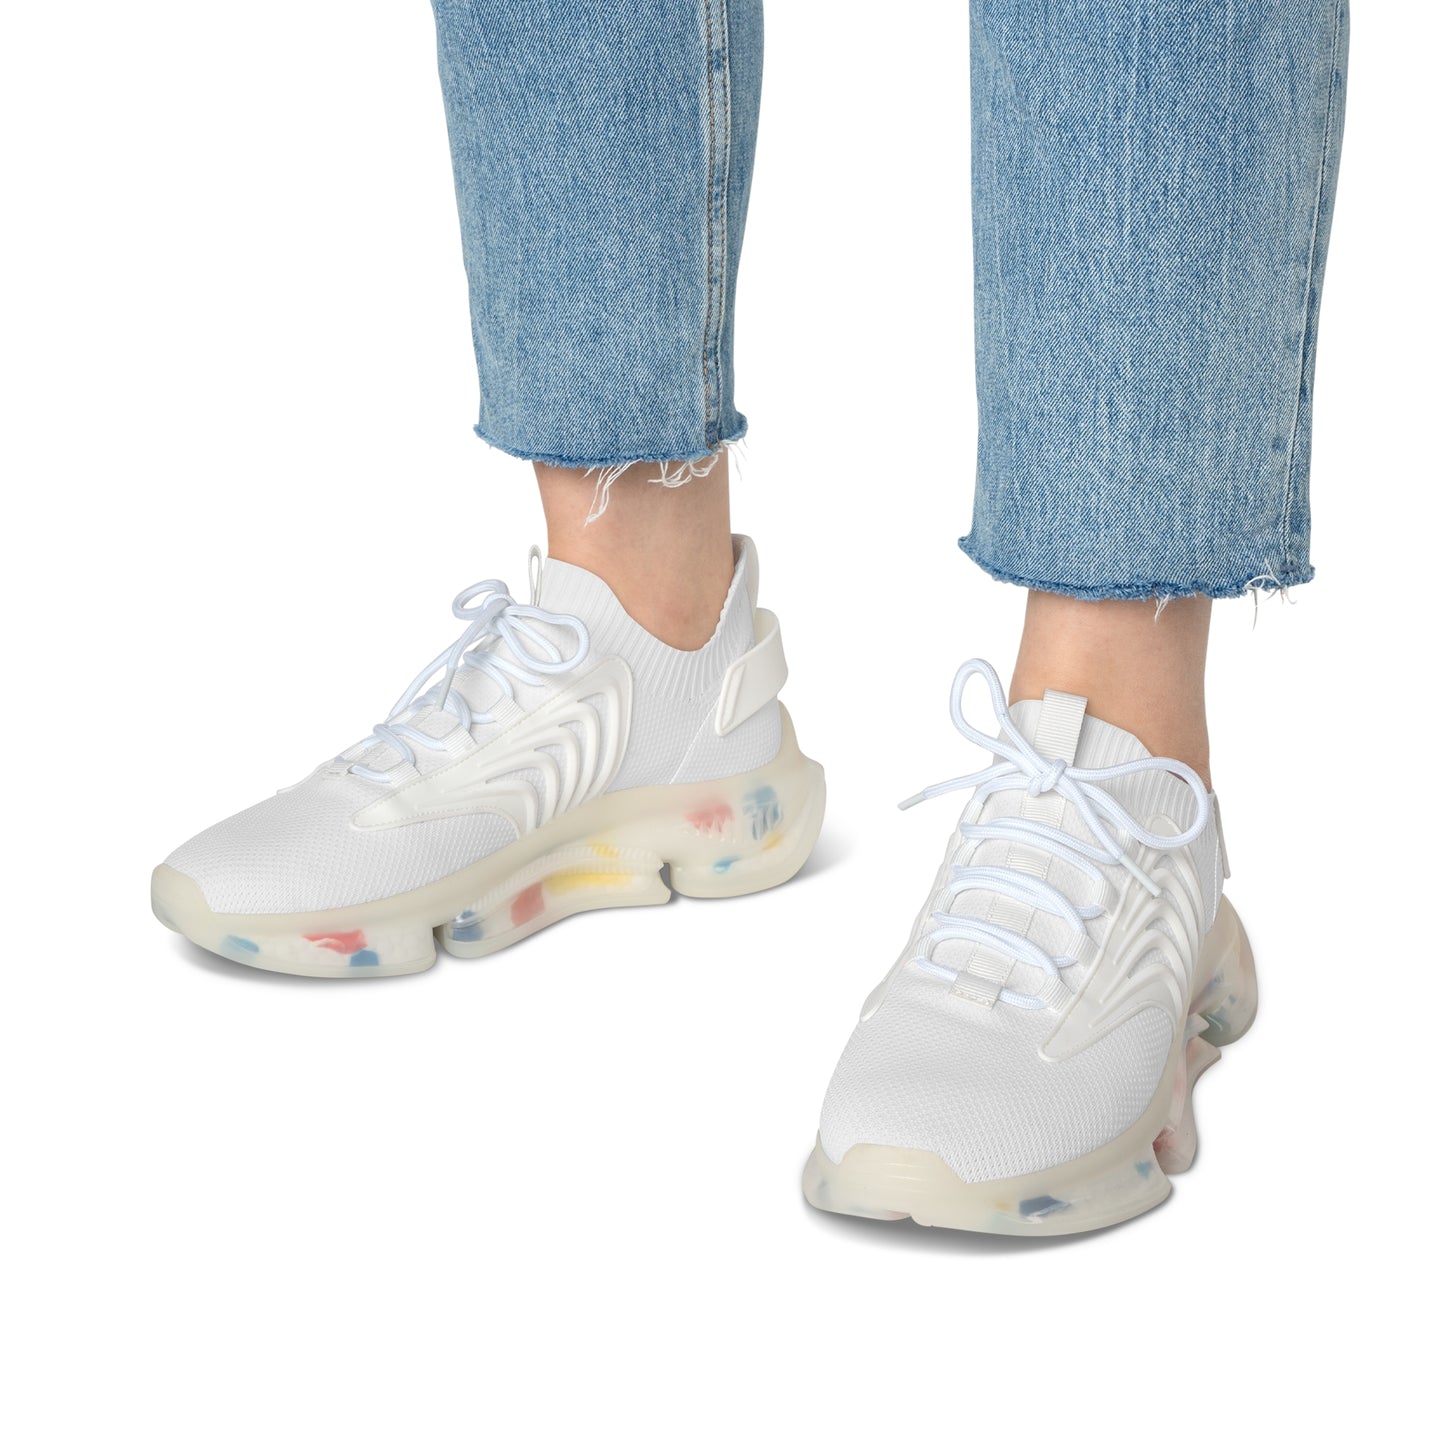 White Women's Mesh Sneakers